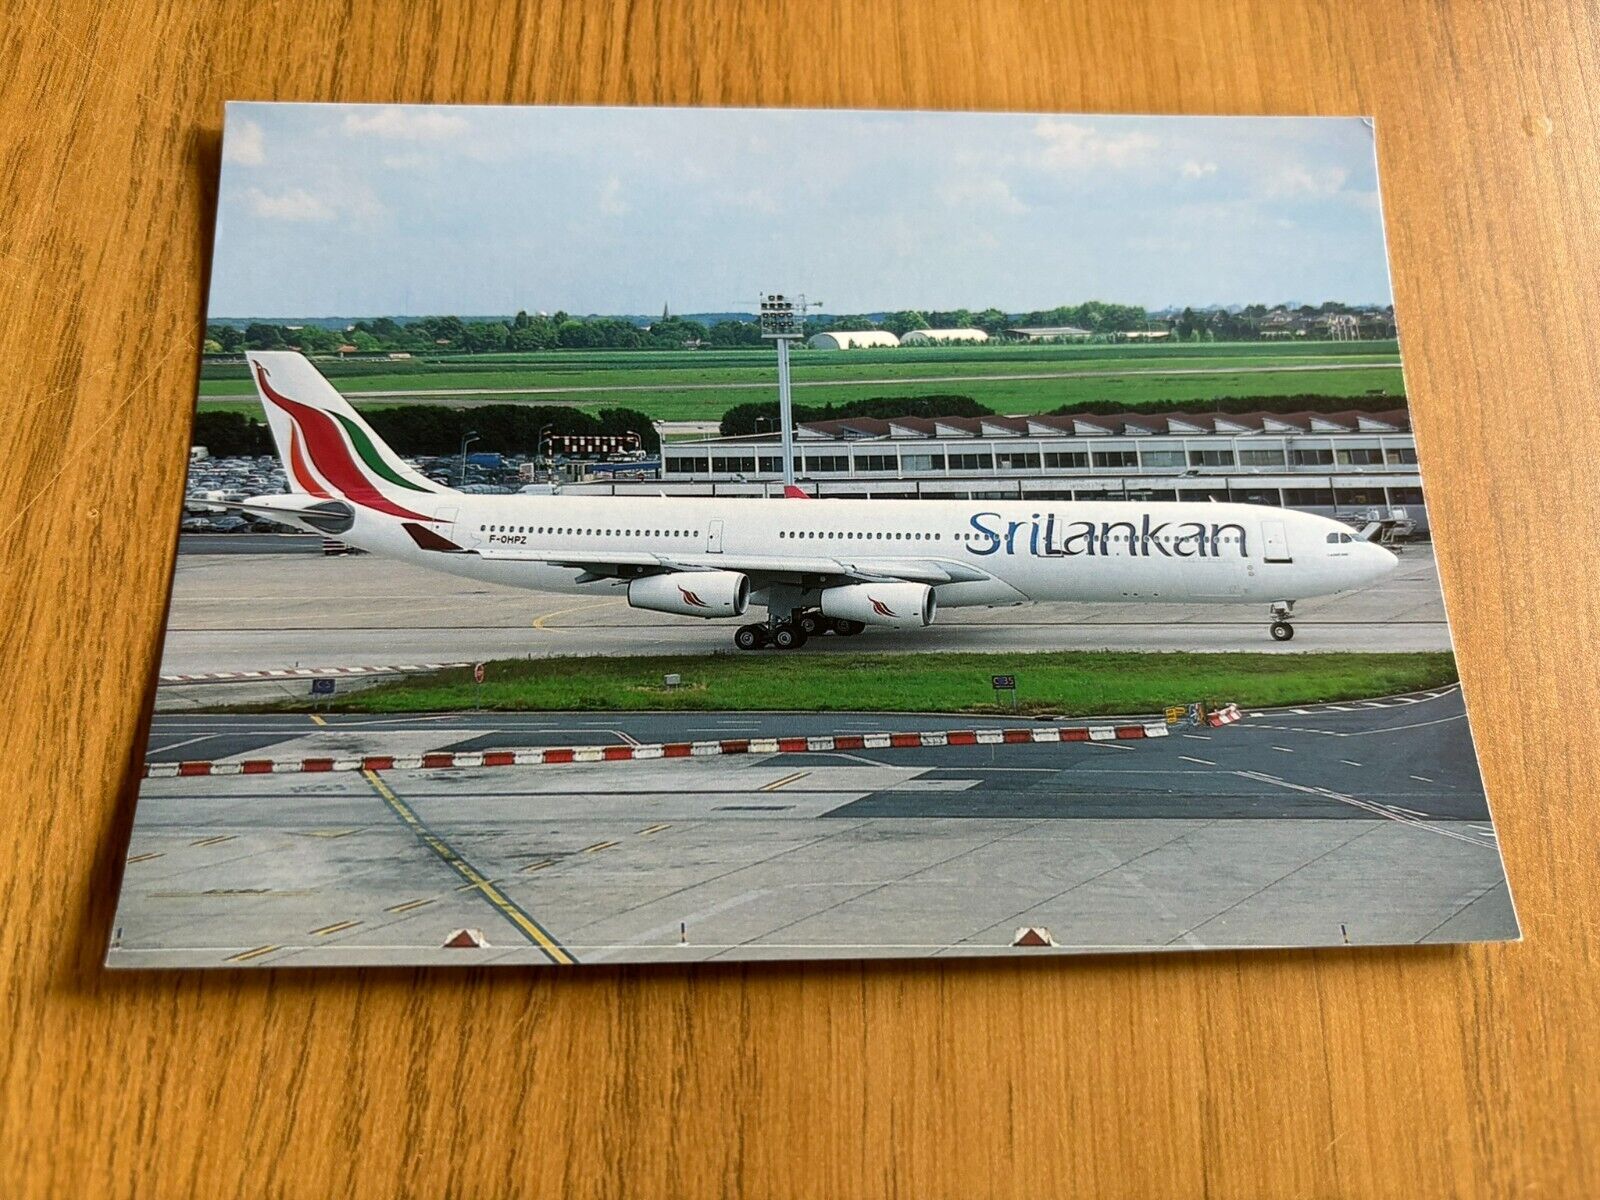 Sri Lankan Airlines Airbus A340-300 aircraft postcard